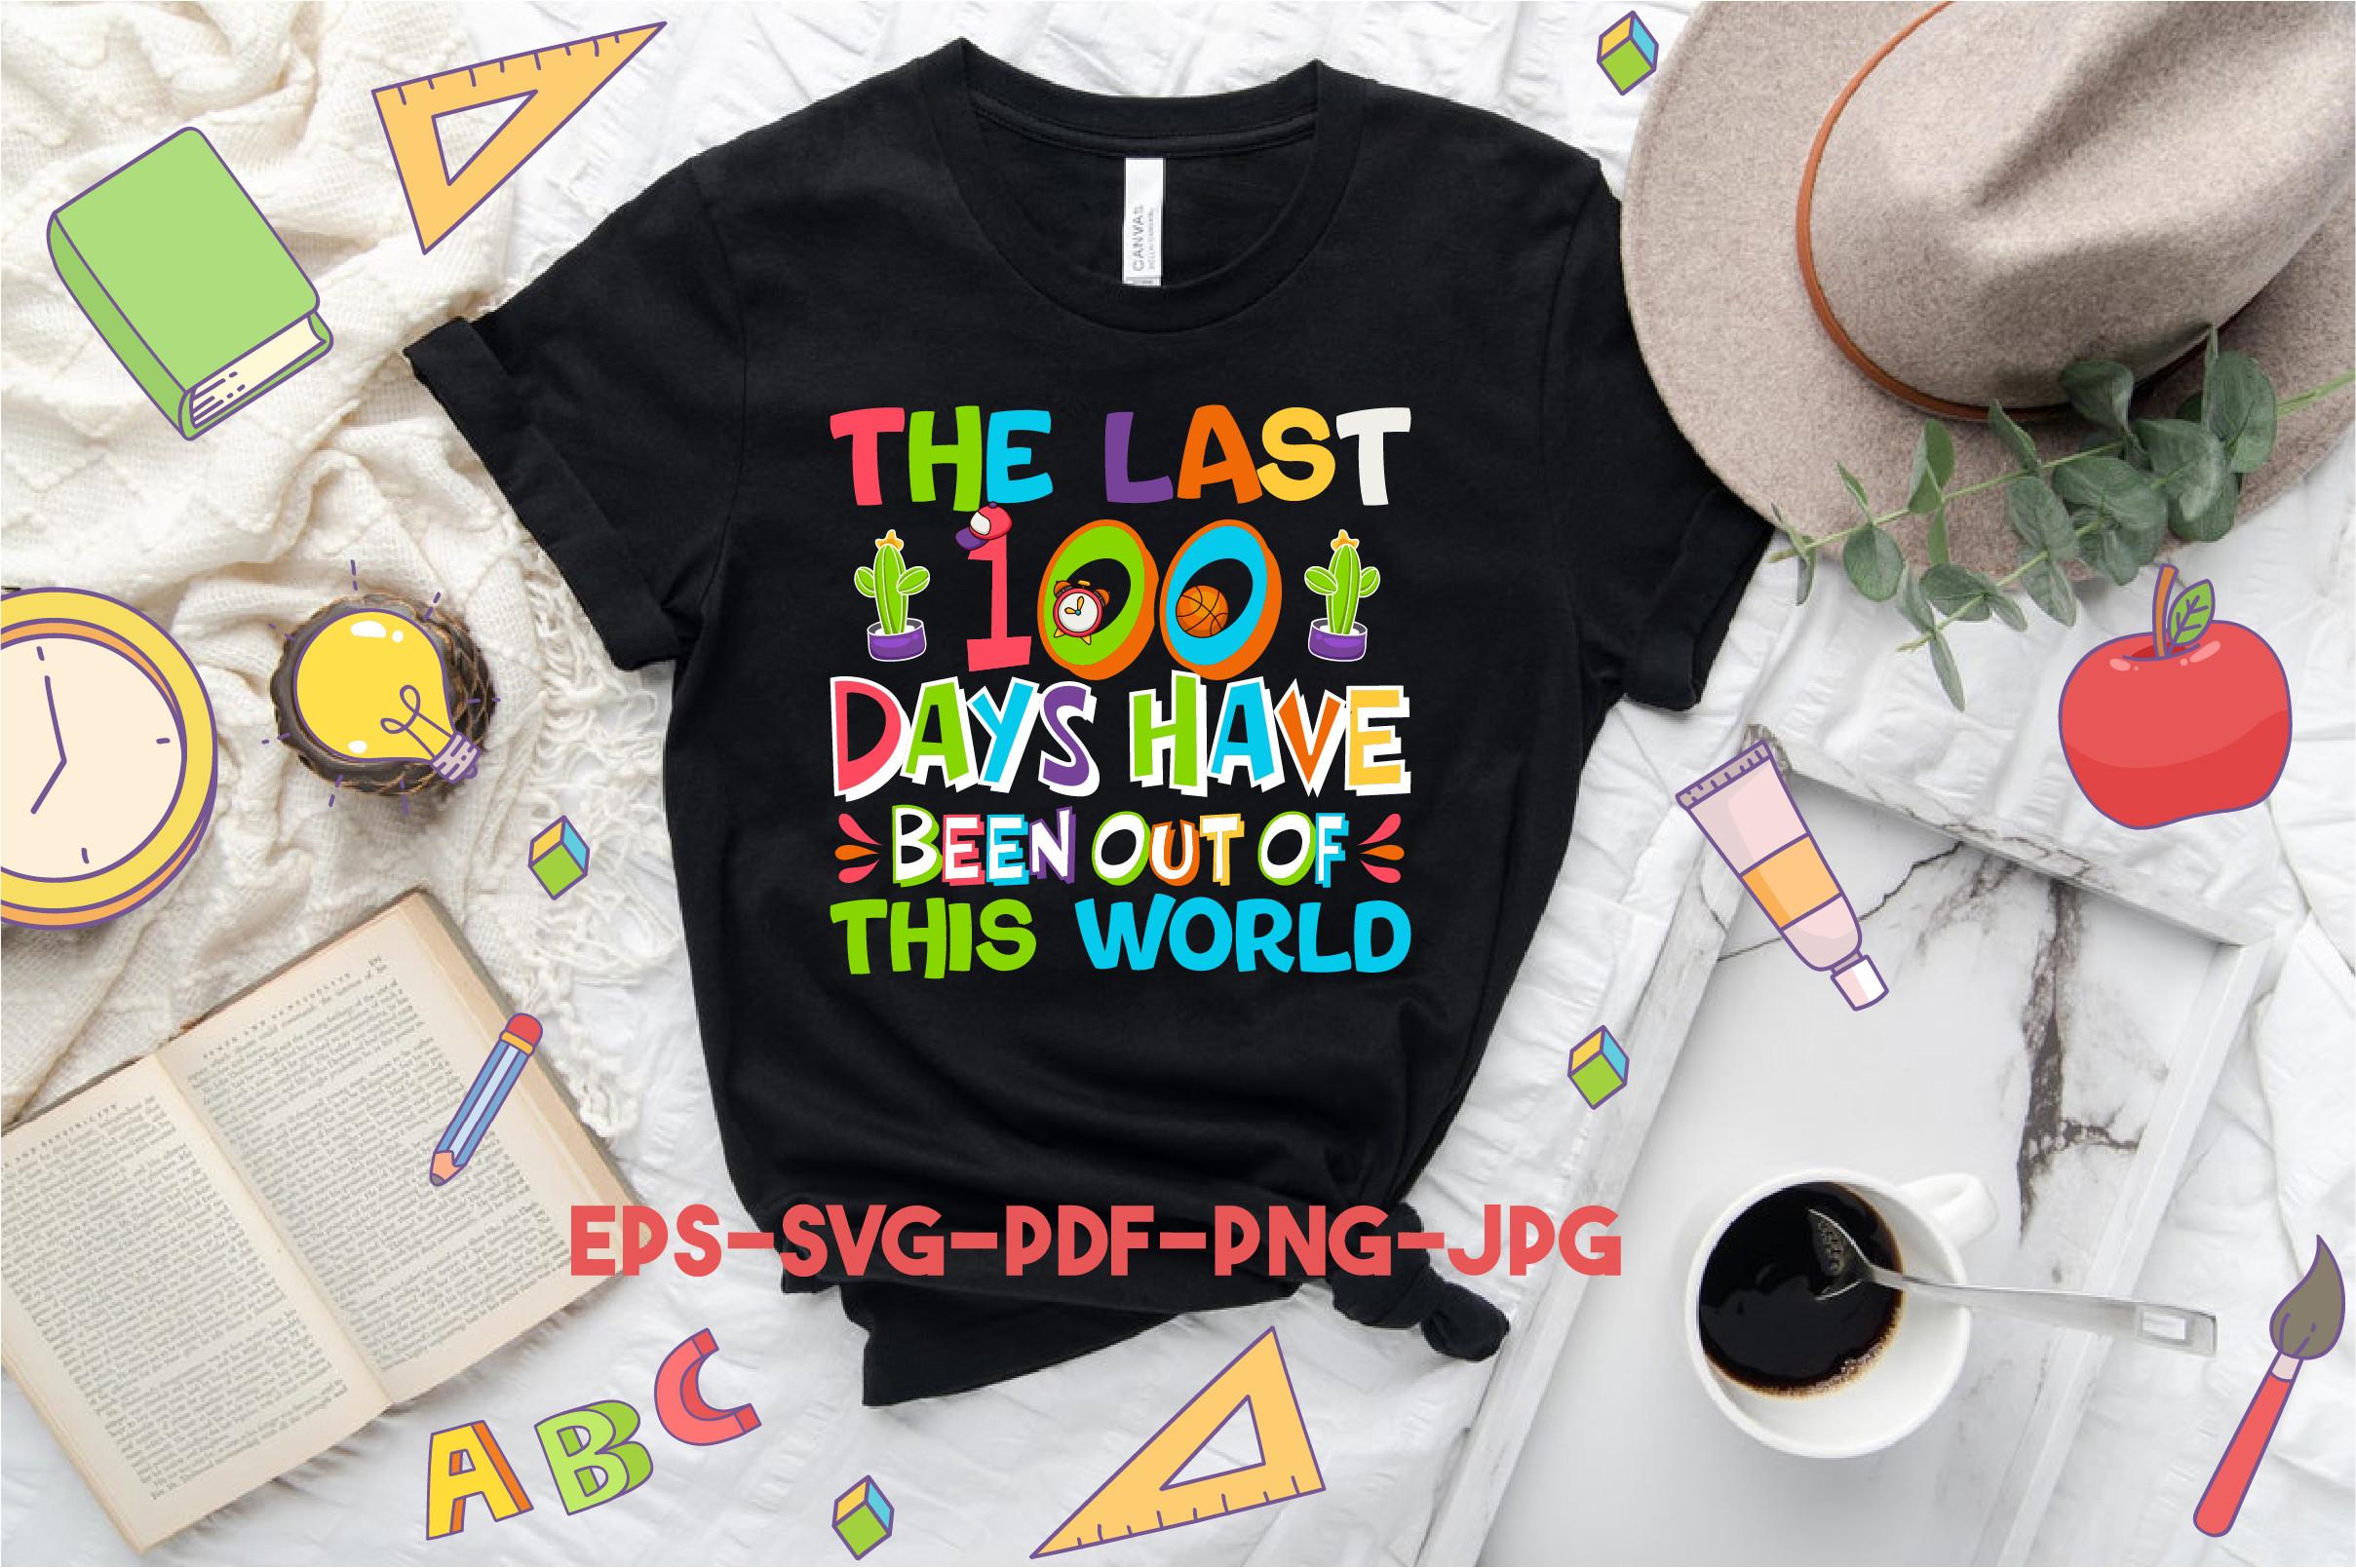 World 100 Days of School T-Shirt Design